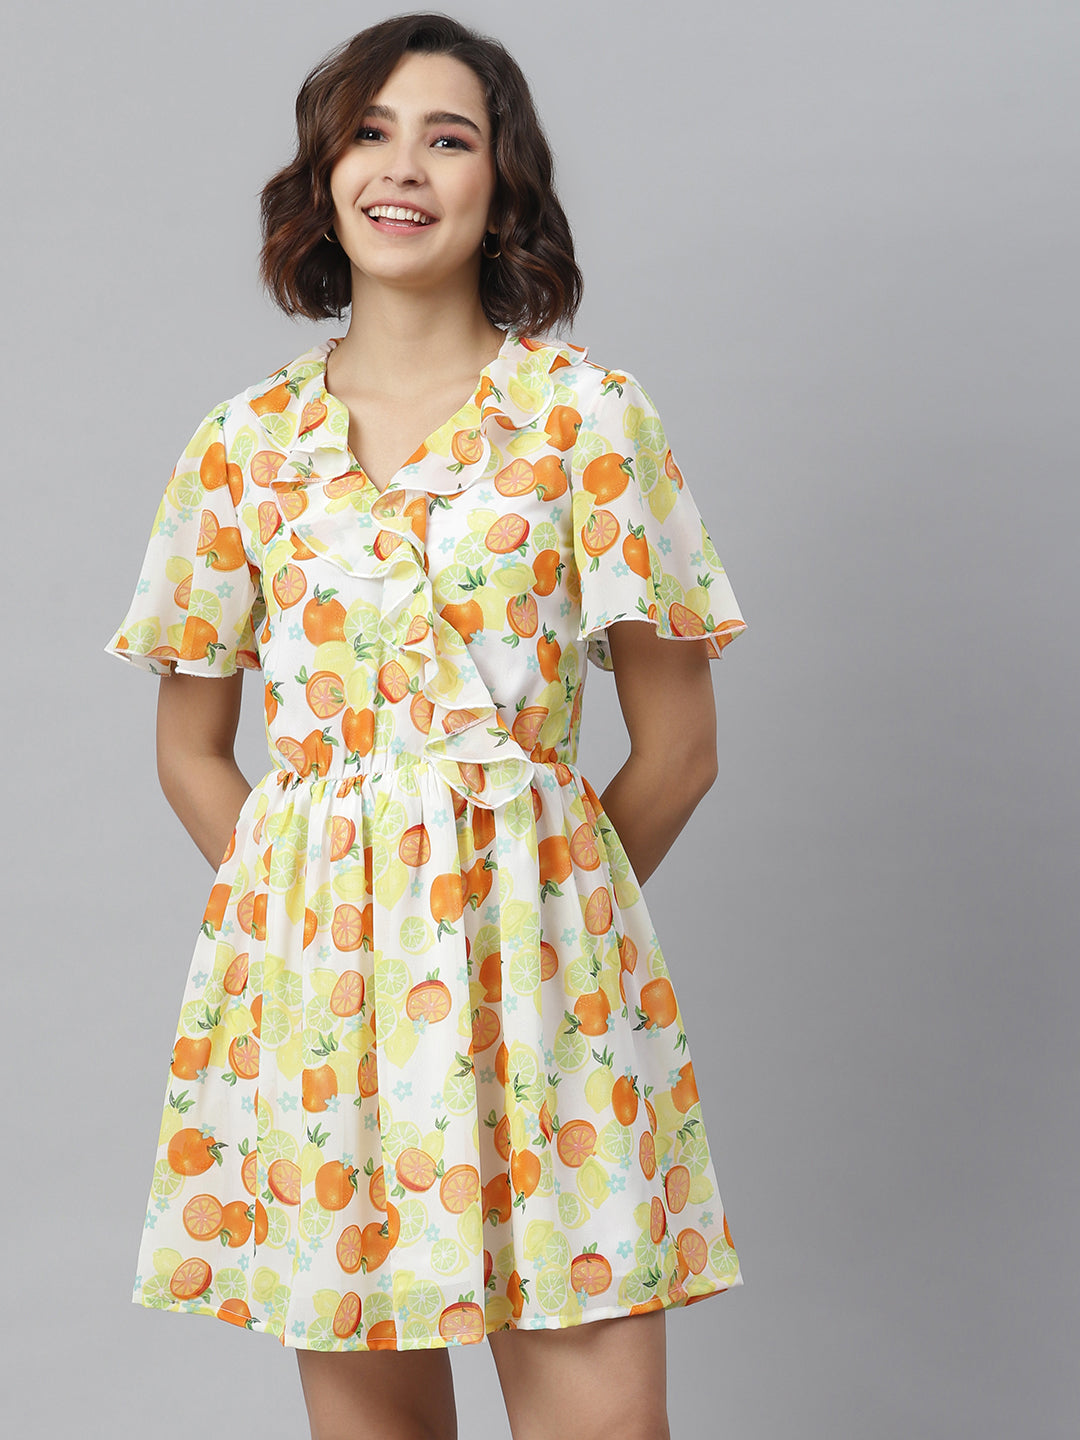 Women's Fruit Print Dress with Ruffle - StyleStone